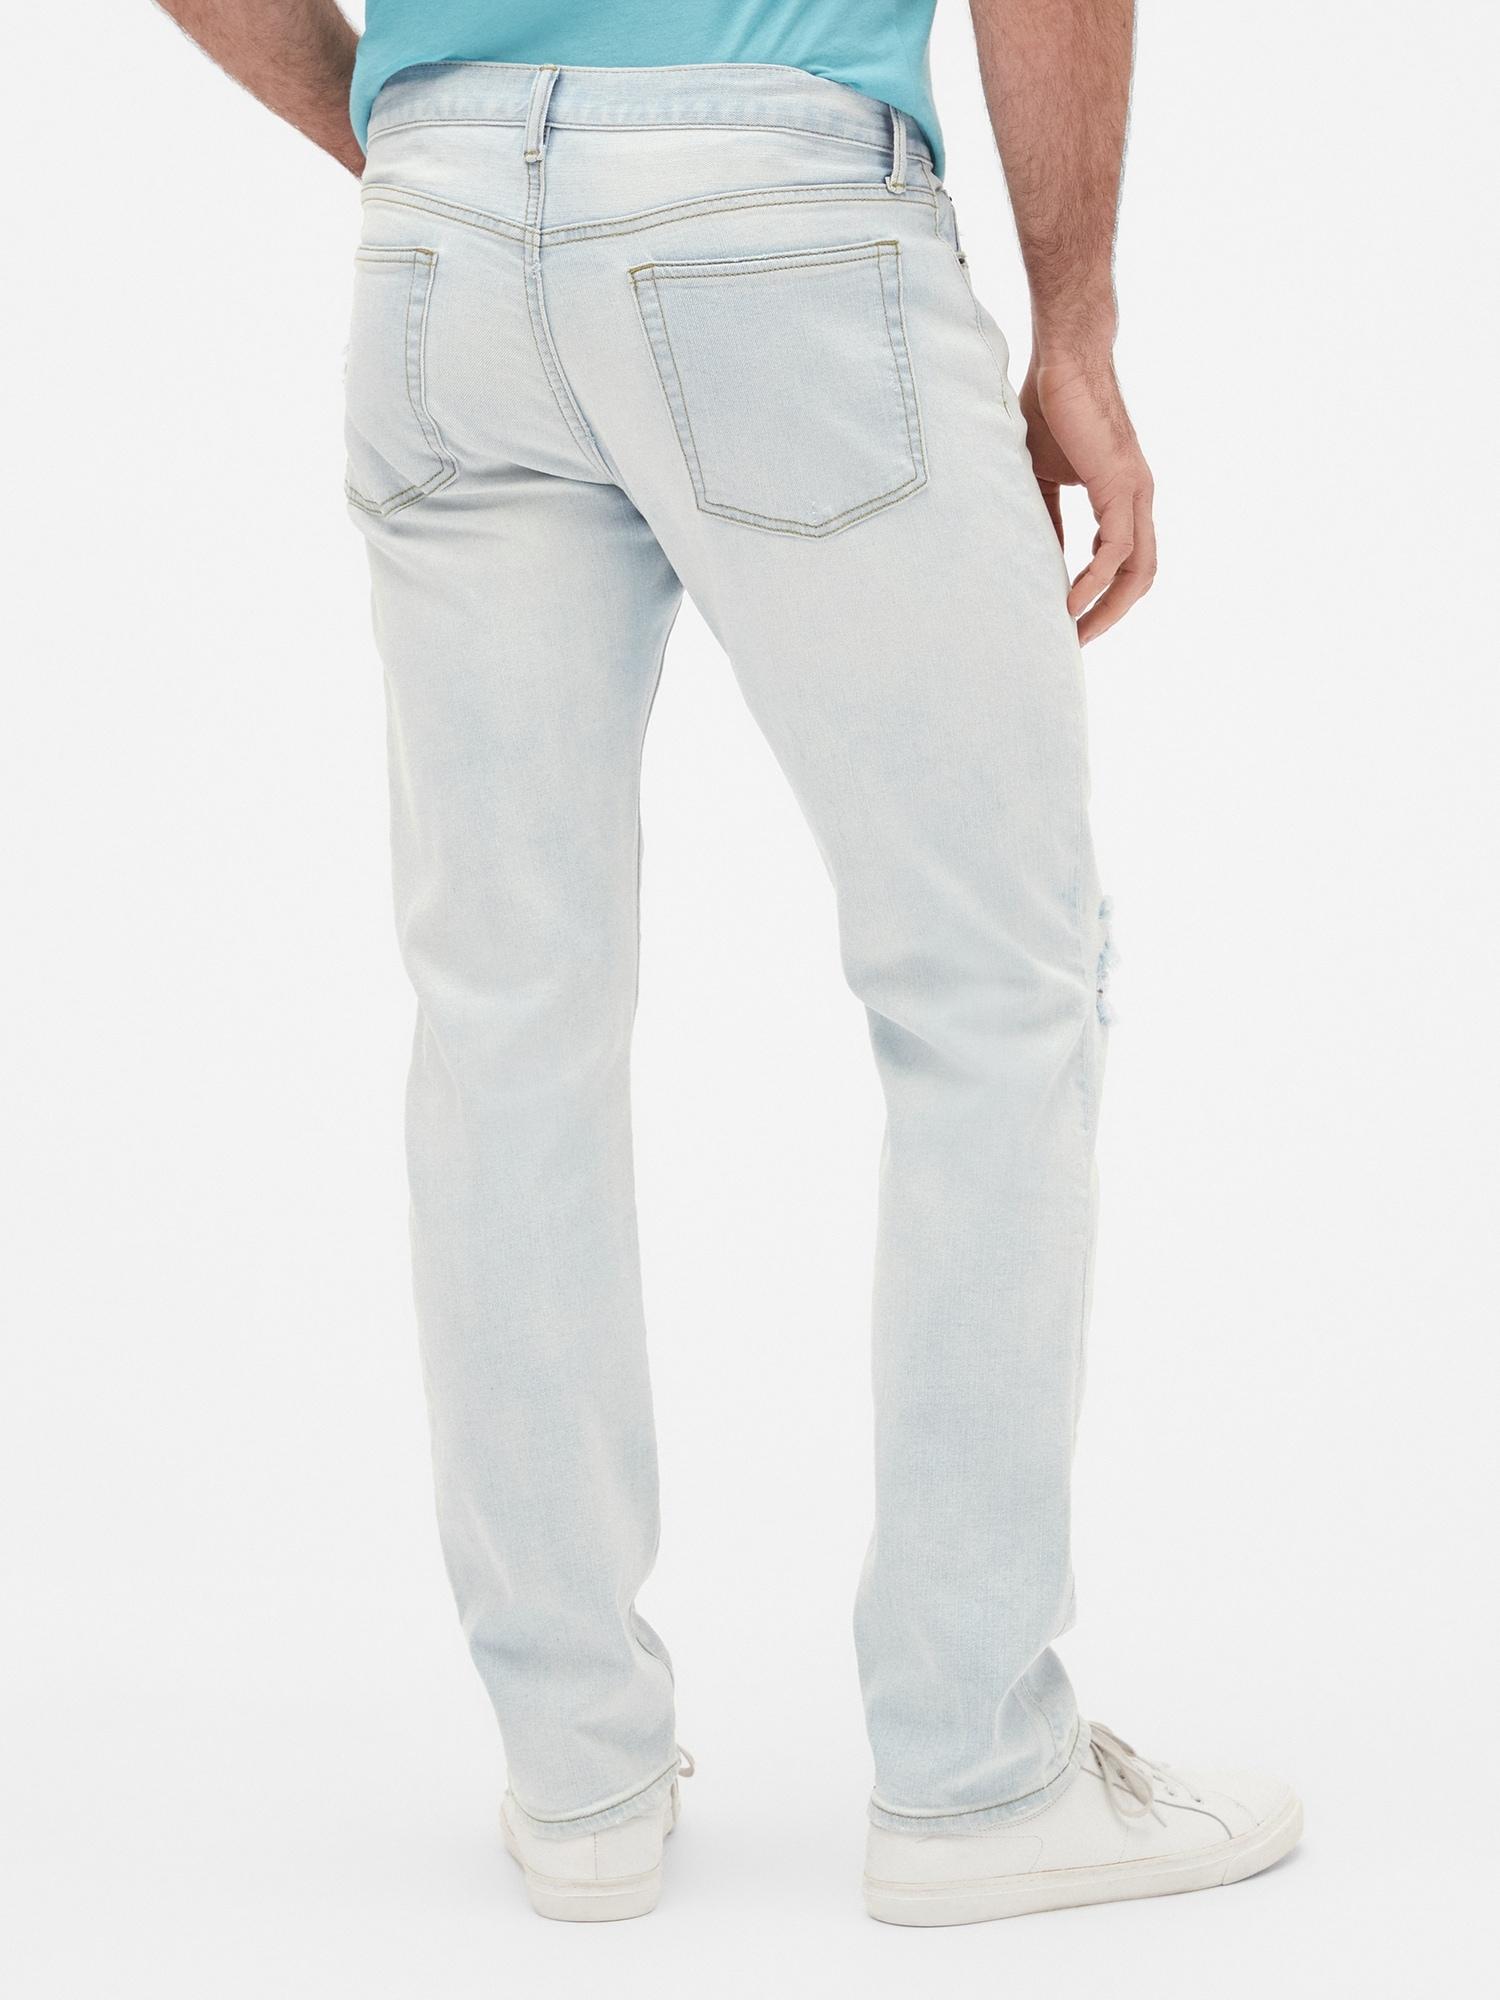 wearlight slim jeans with gapflex